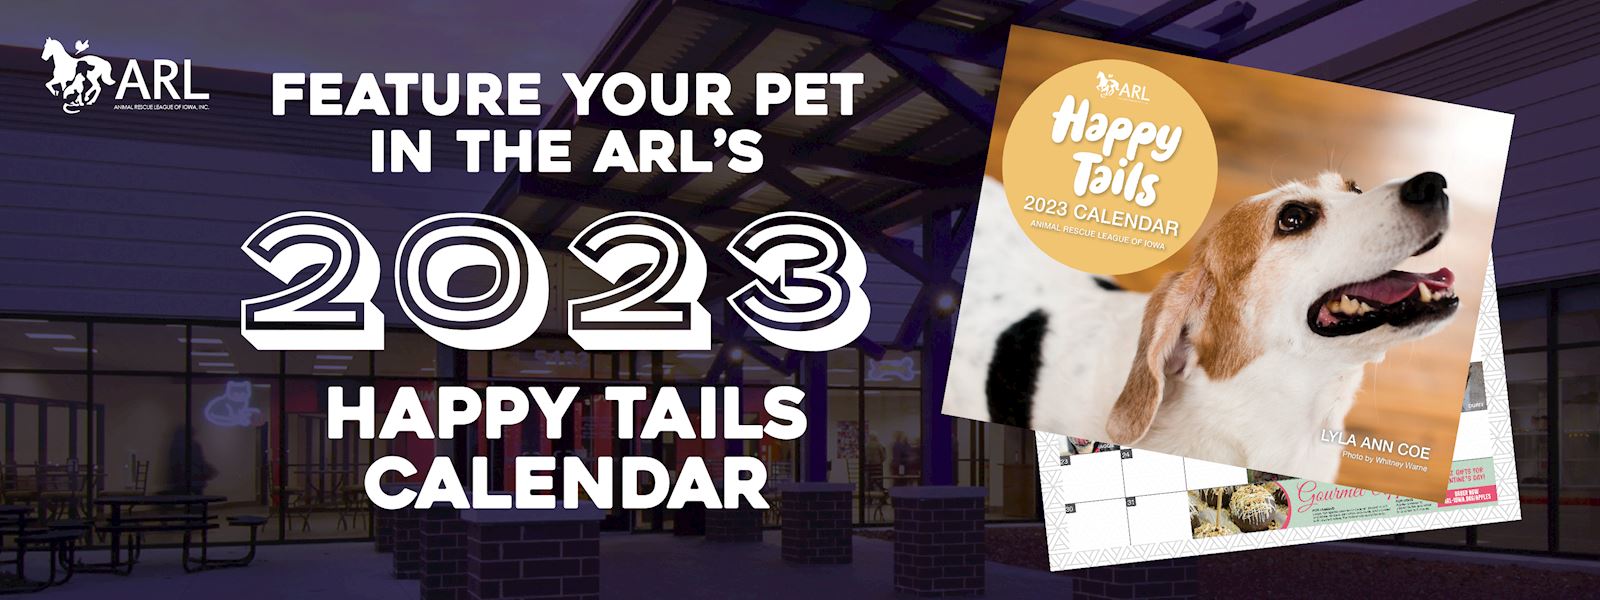 2023 Happy Tails Calendar